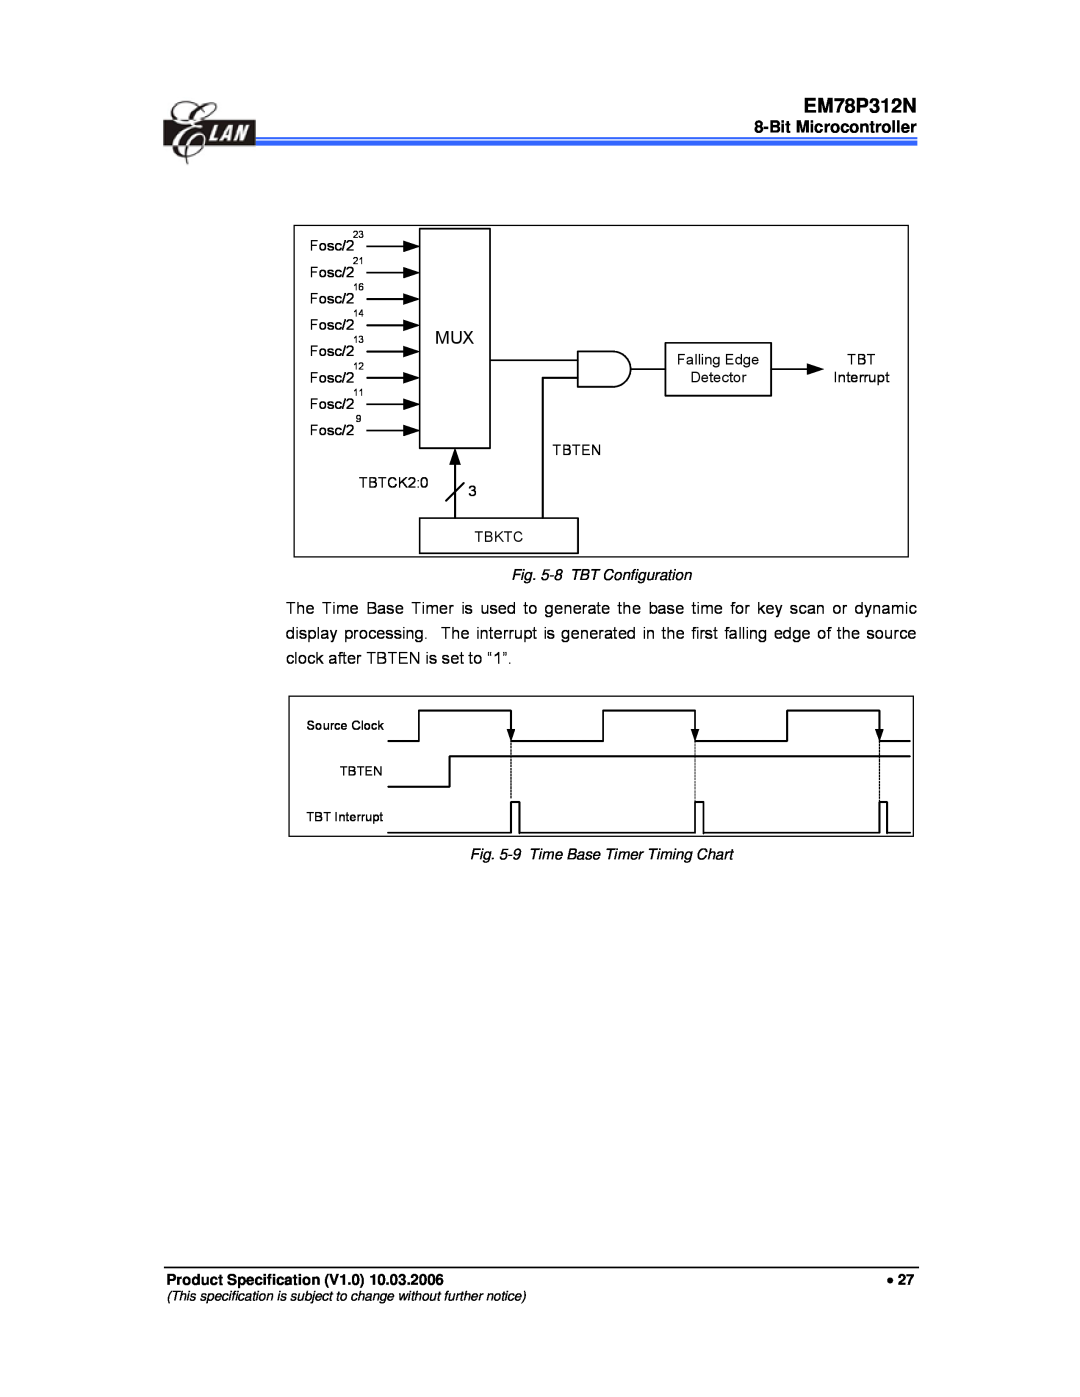 IBM EM78P312N manual Bit Microcontroller, 8 TBT Configuration, 9 Time Base Timer Timing Chart 